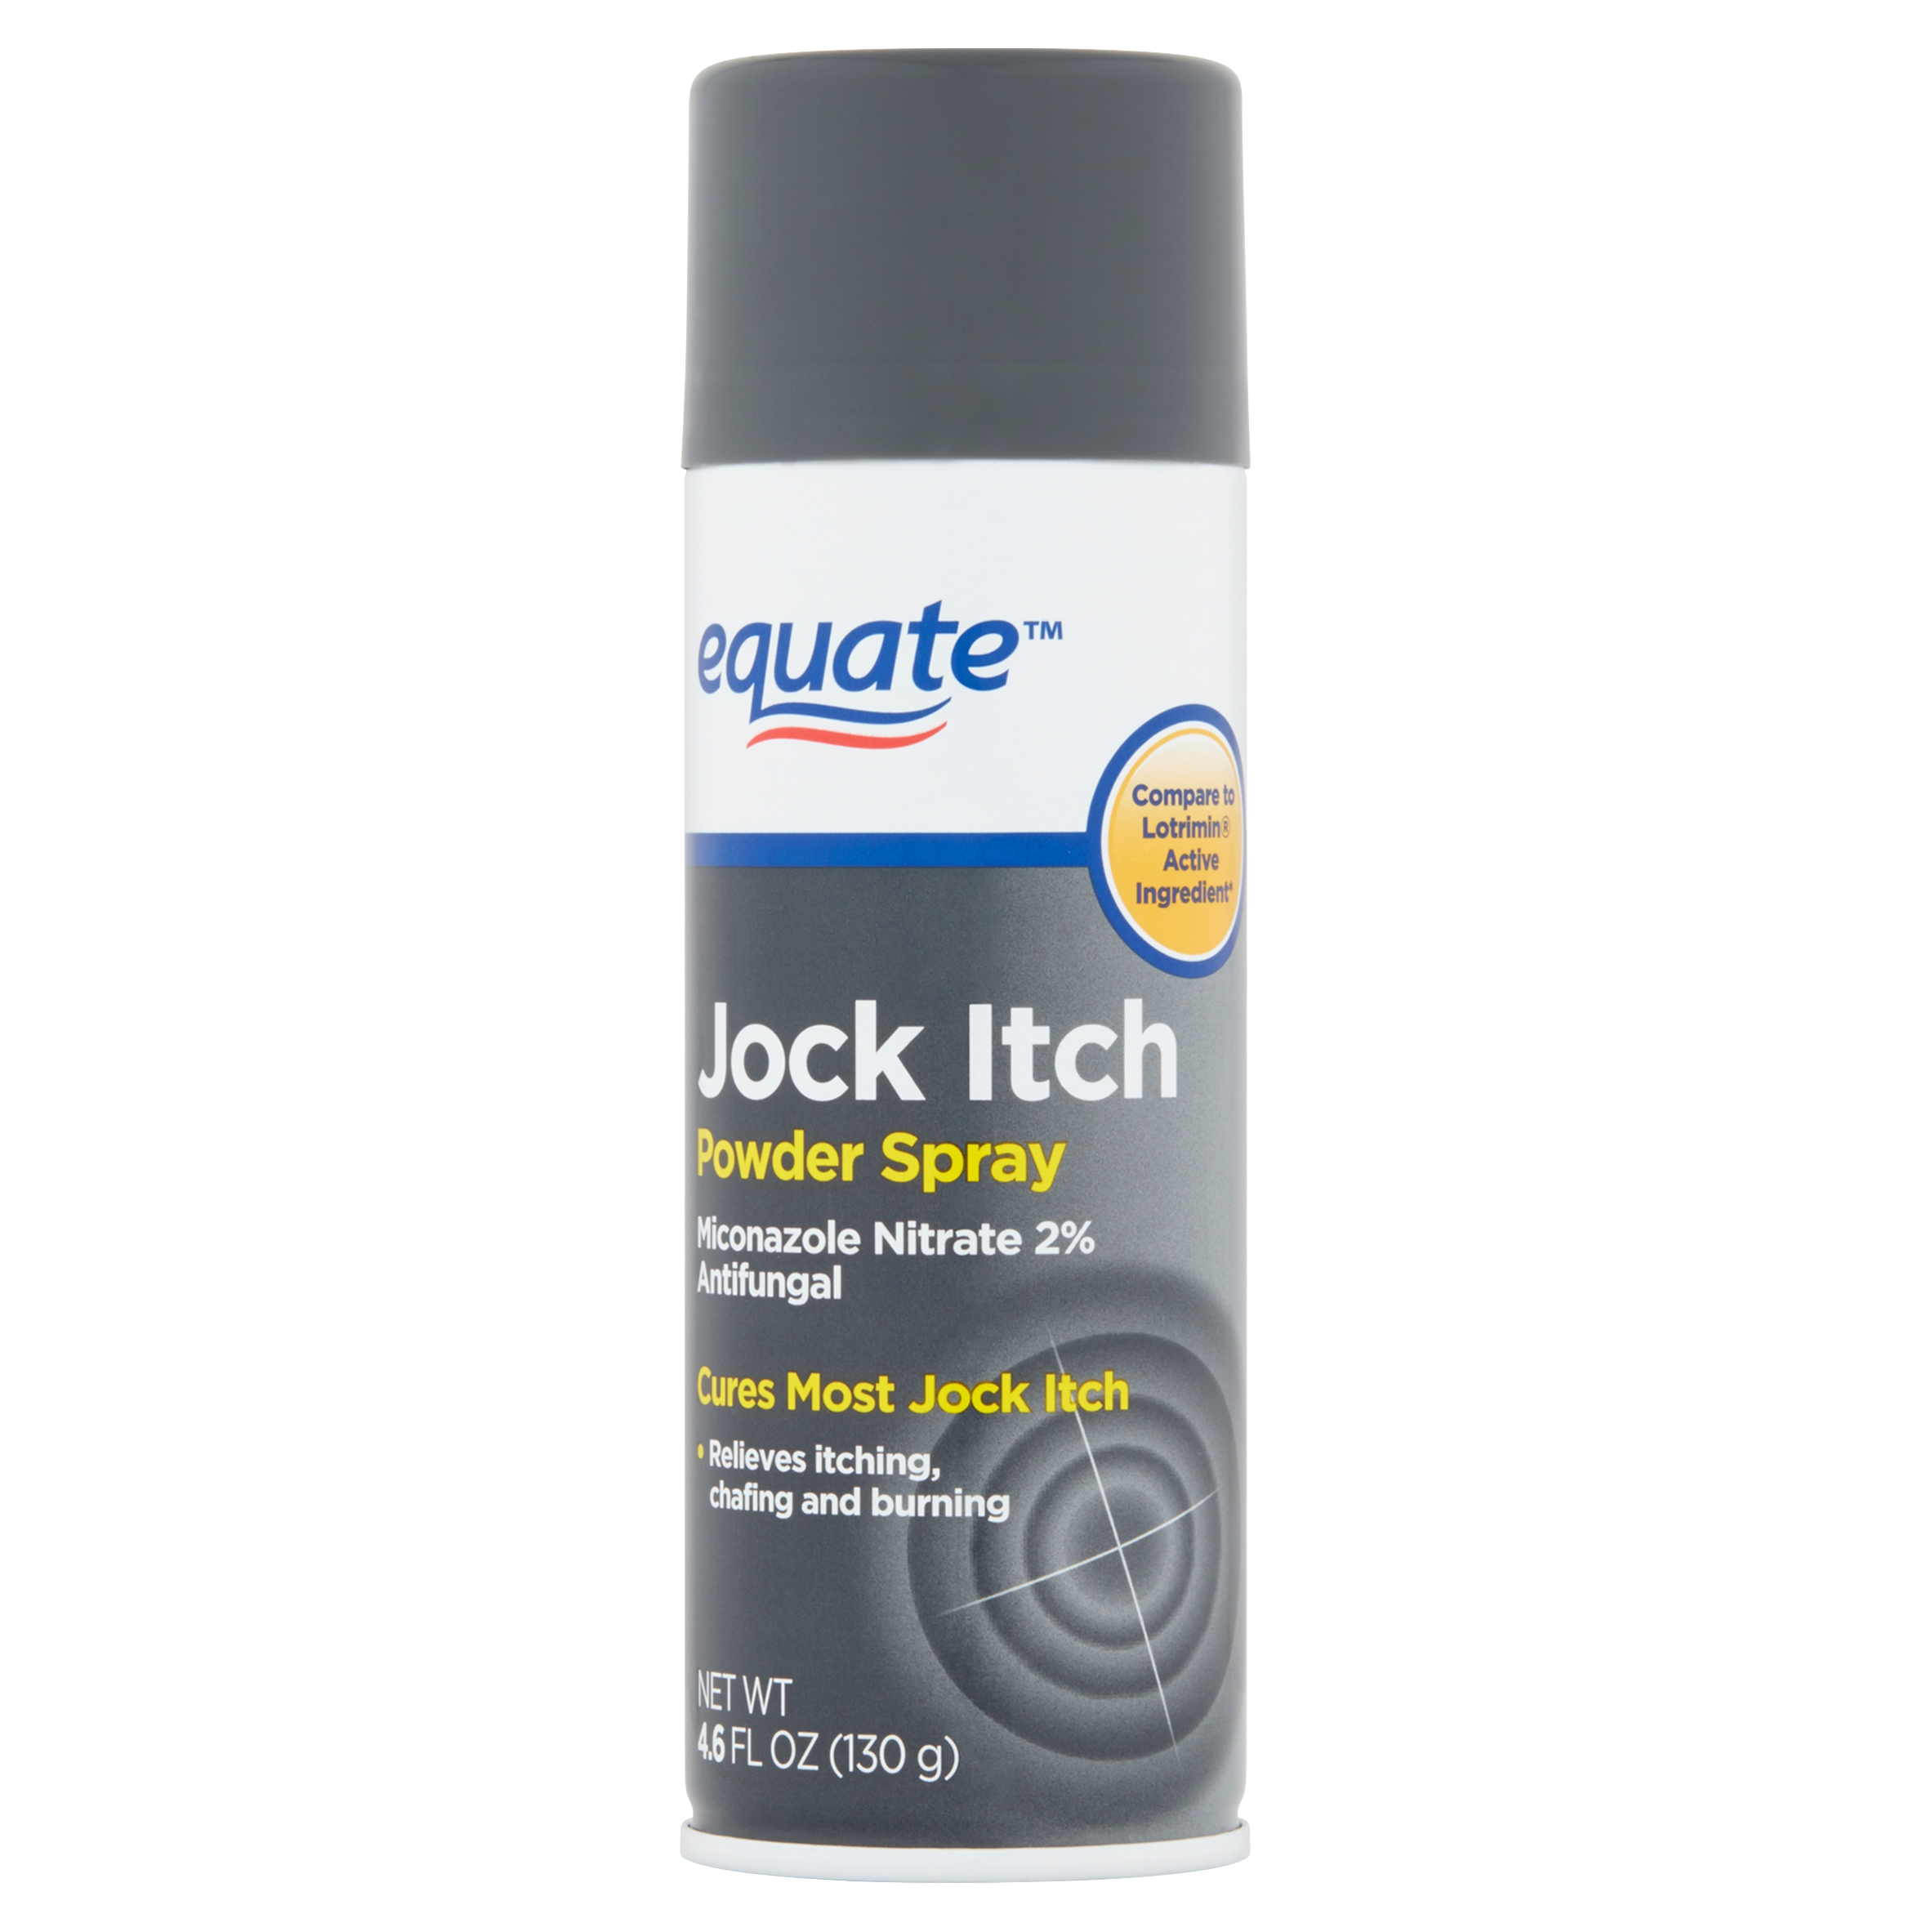 Equate Jock Itch Powder Spray, 4.6 fl oz - image 3 of 10